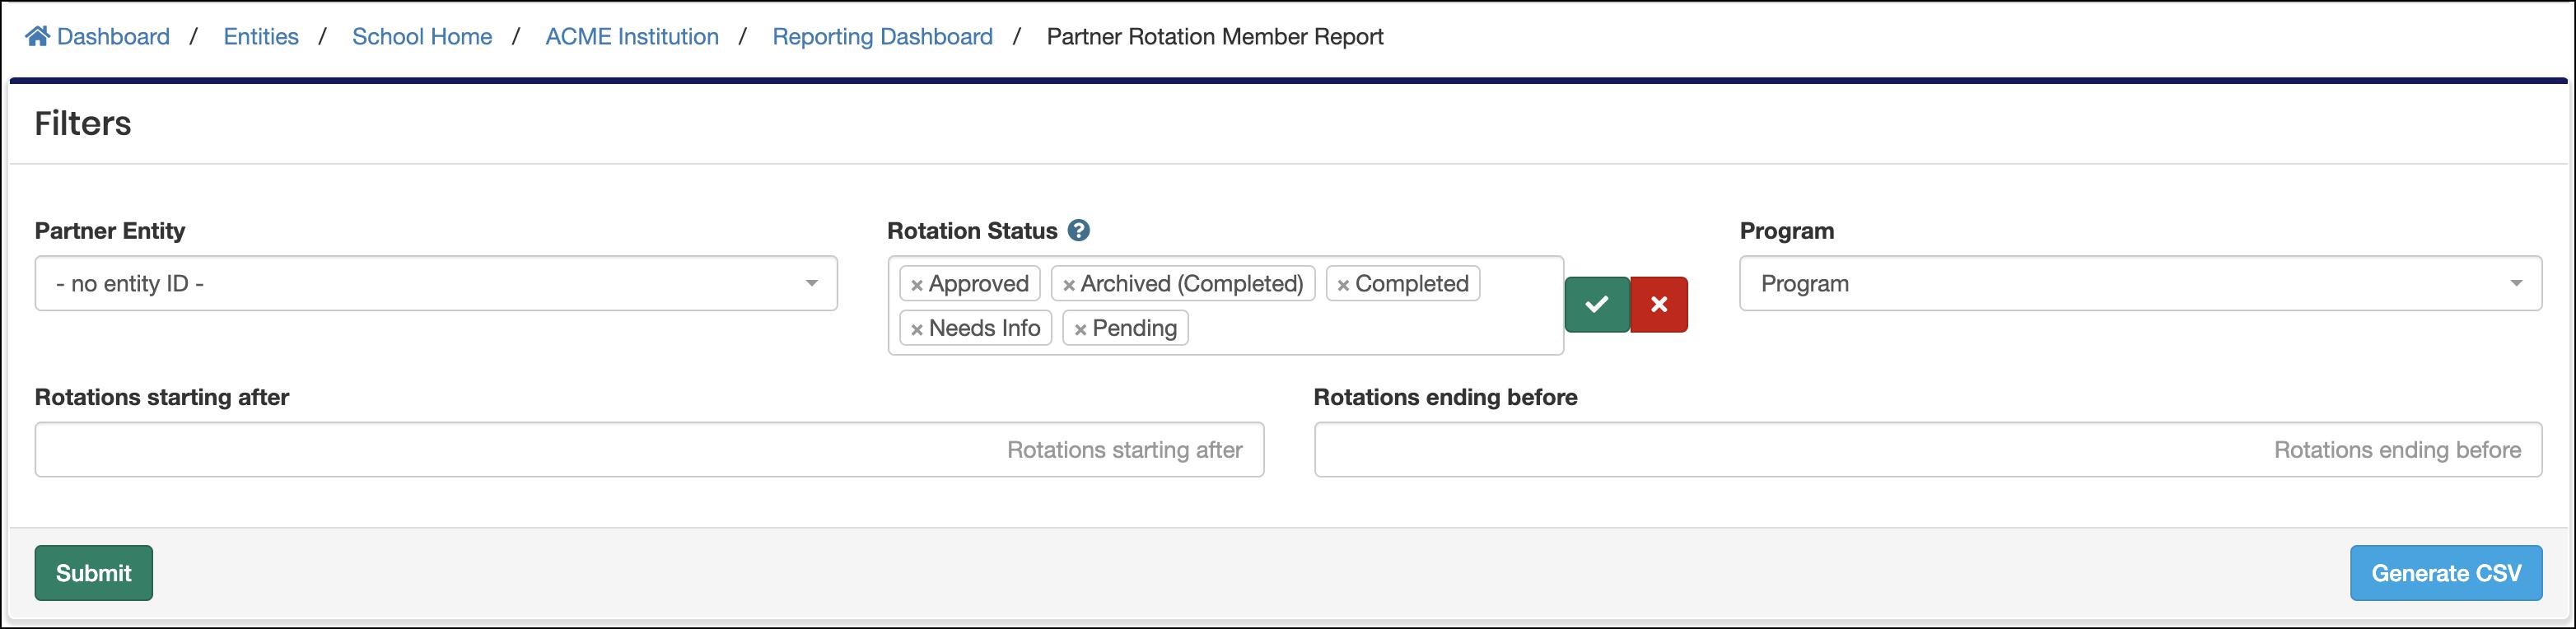 Partner Rotation Member Report filter options